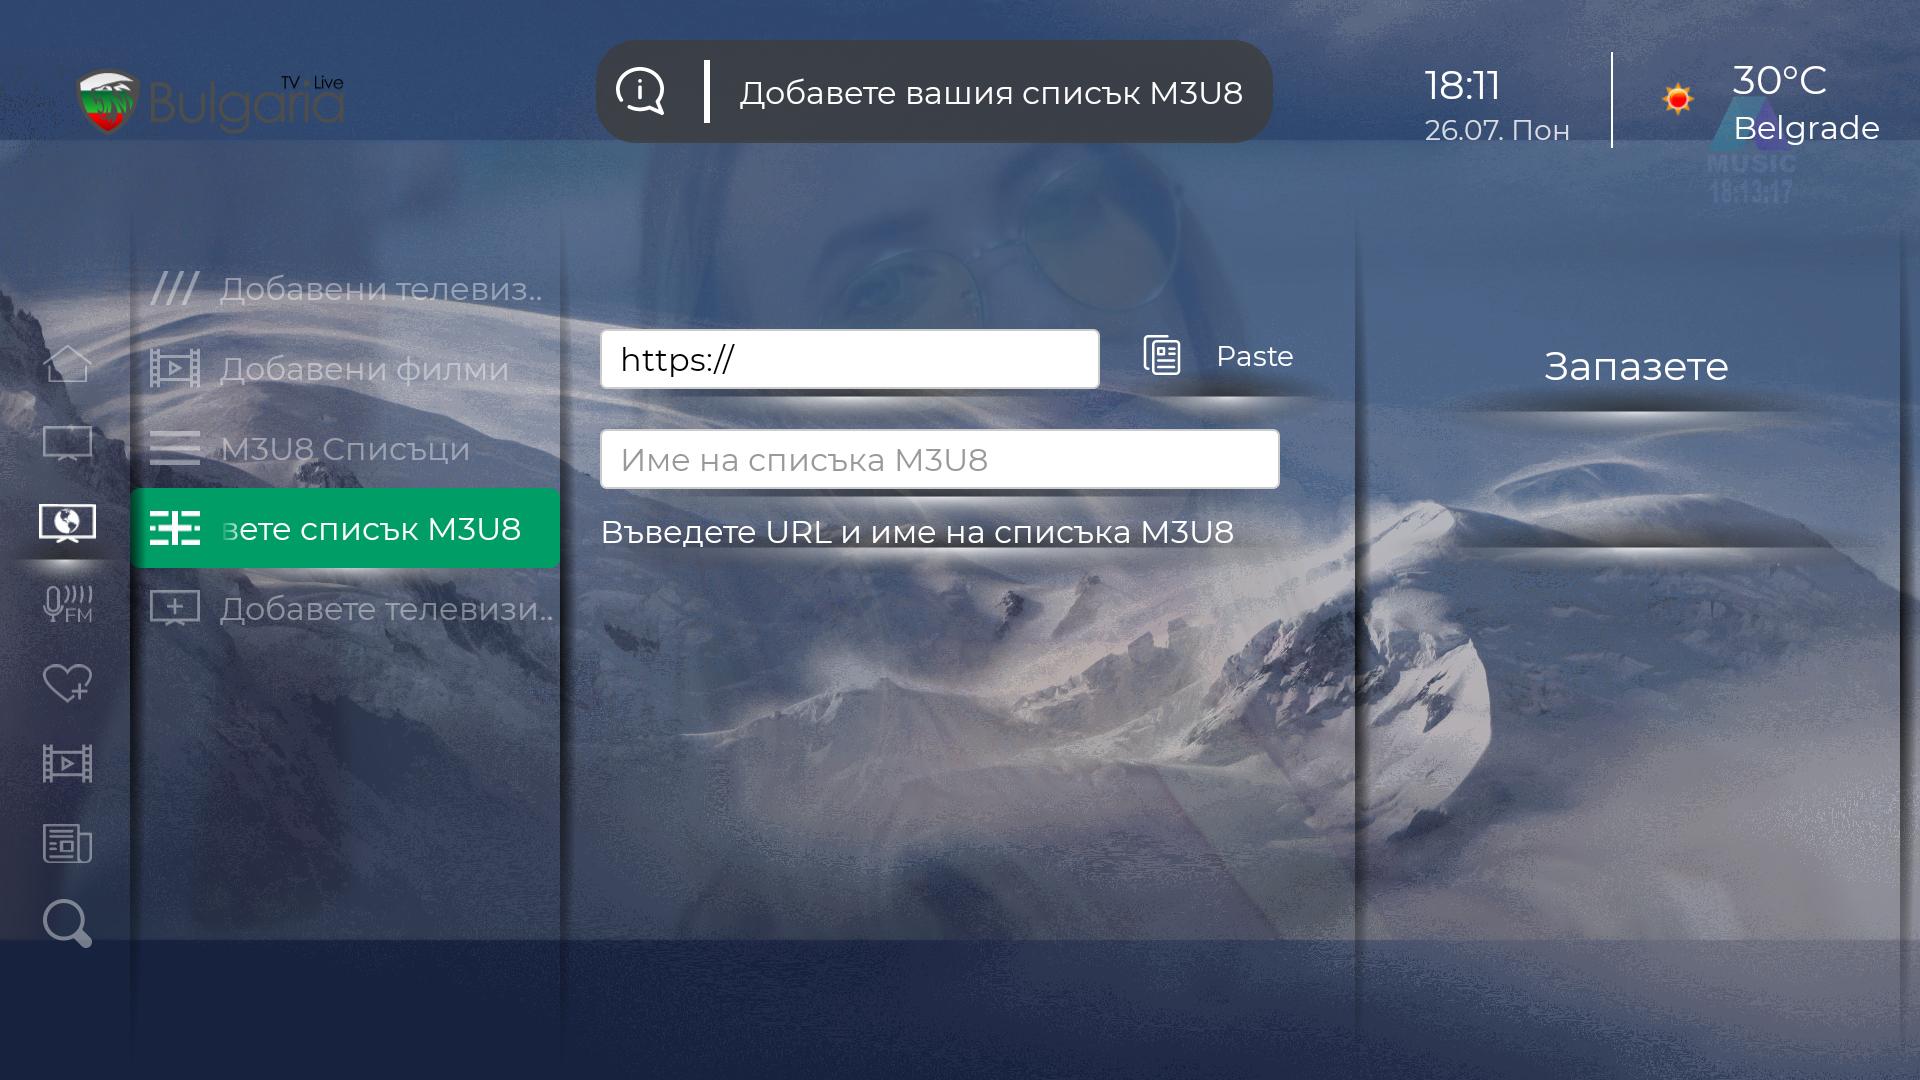 Bulgaria Live 1.2.04 Screenshot 5